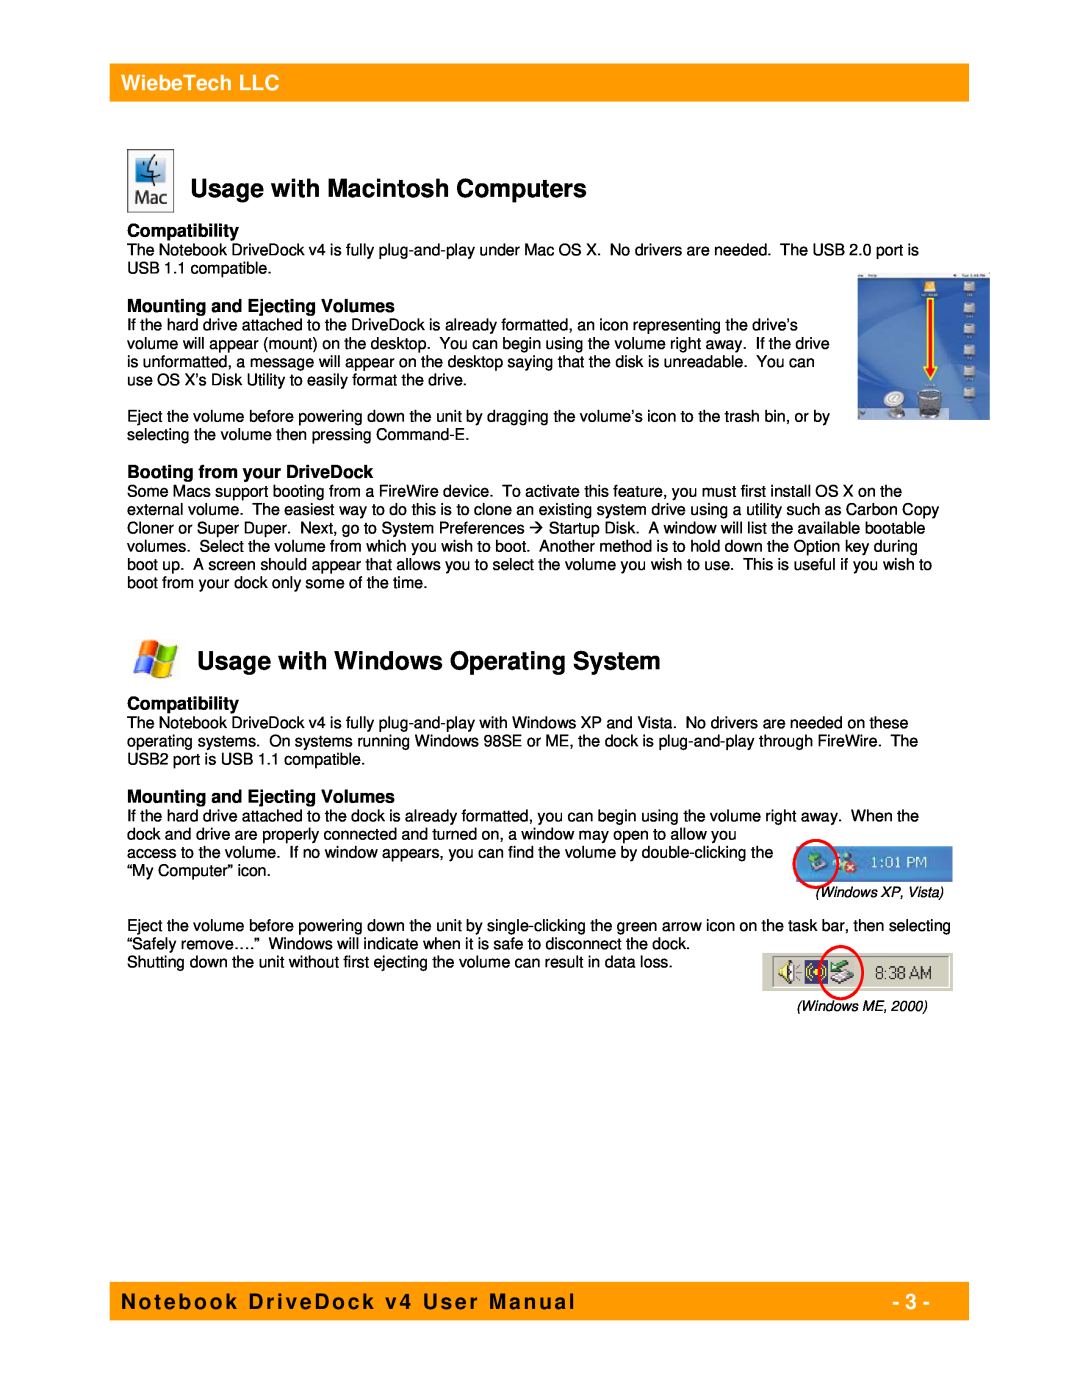 WiebeTech NBDDV4 Usage with Macintosh Computers, Usage with Windows Operating System, WiebeTech LLC, Compatibility 